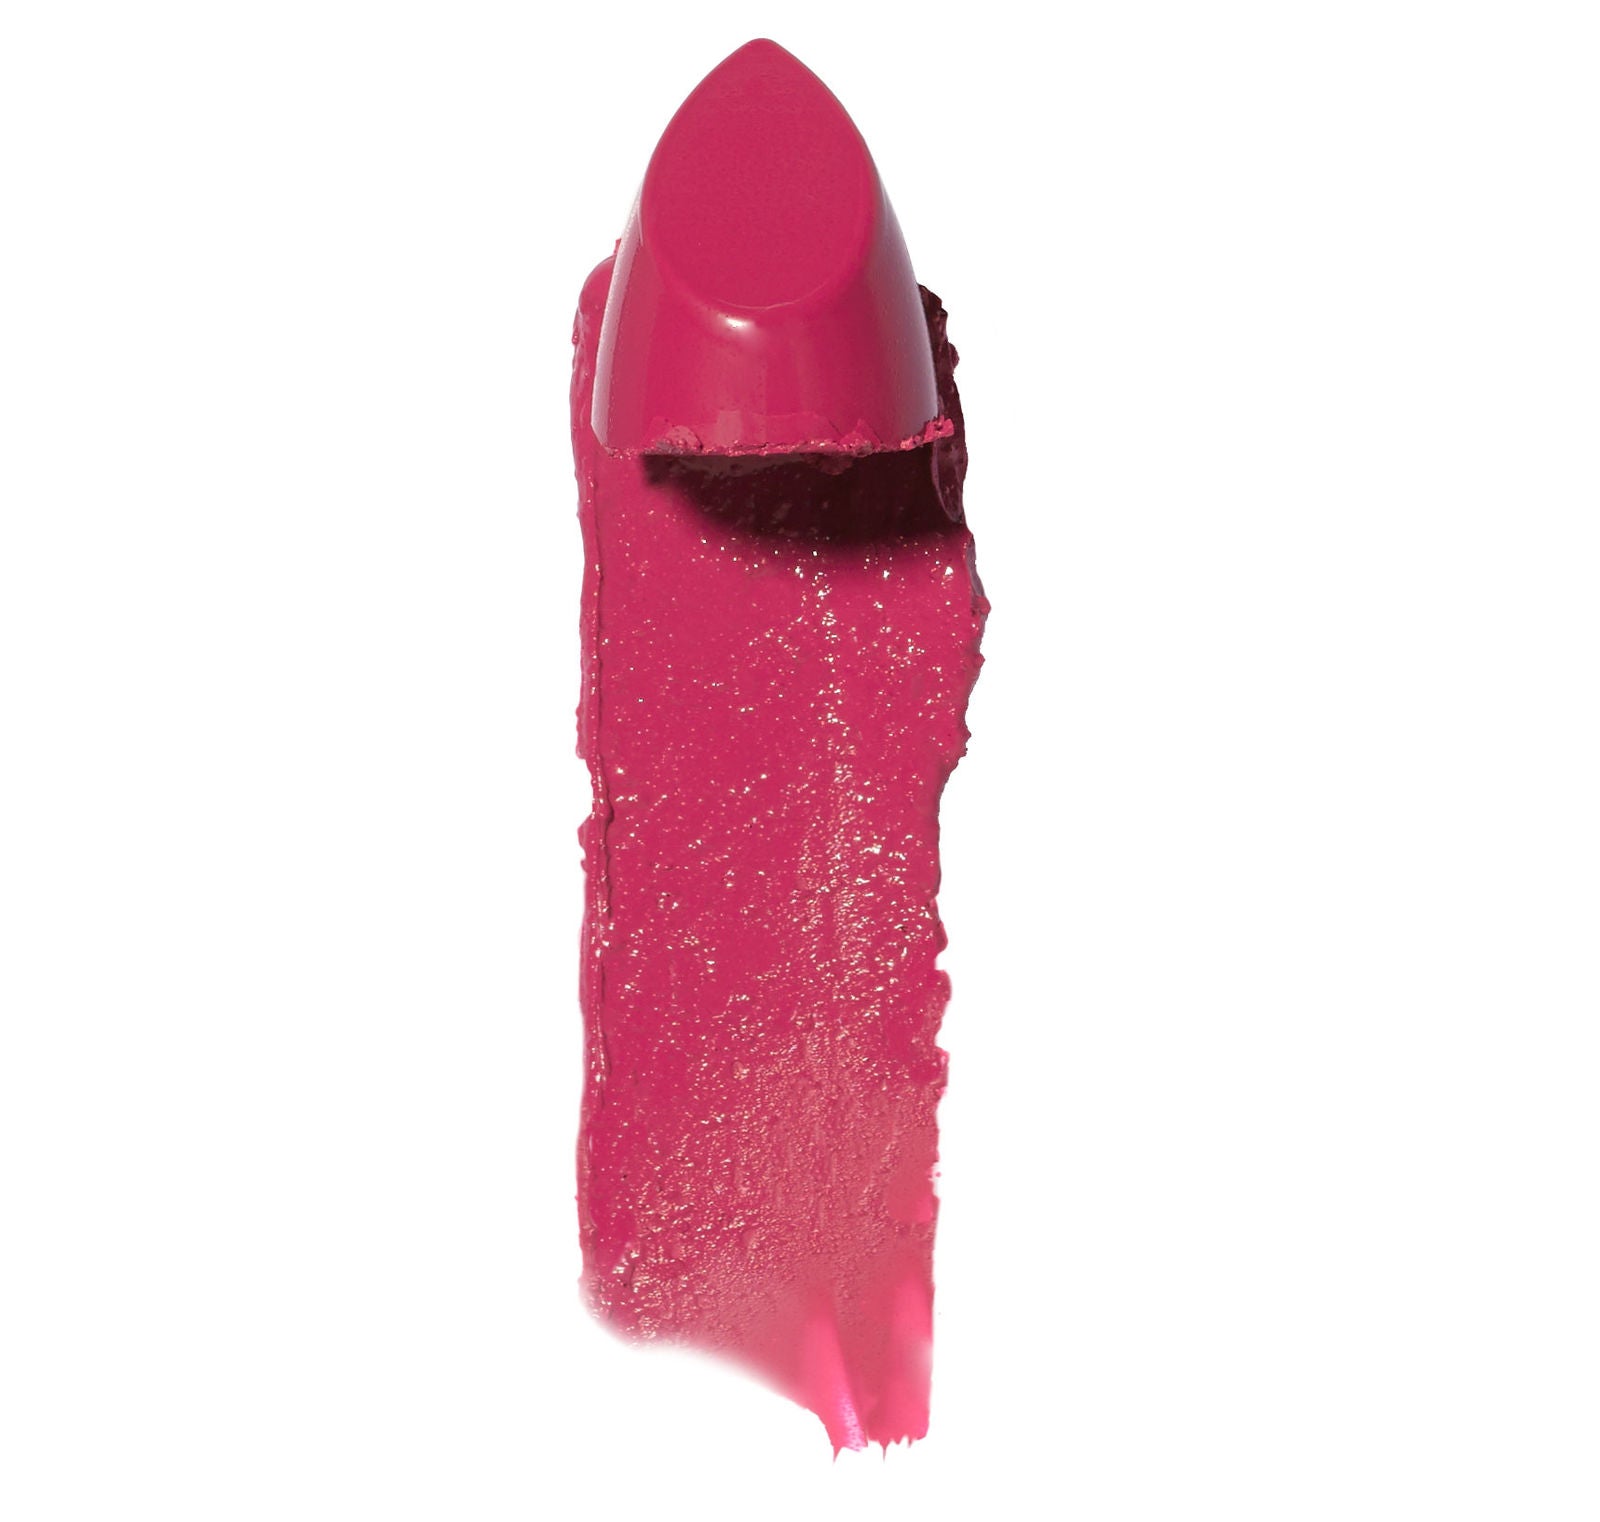 ILIA Color Block Lipstick - Knockout